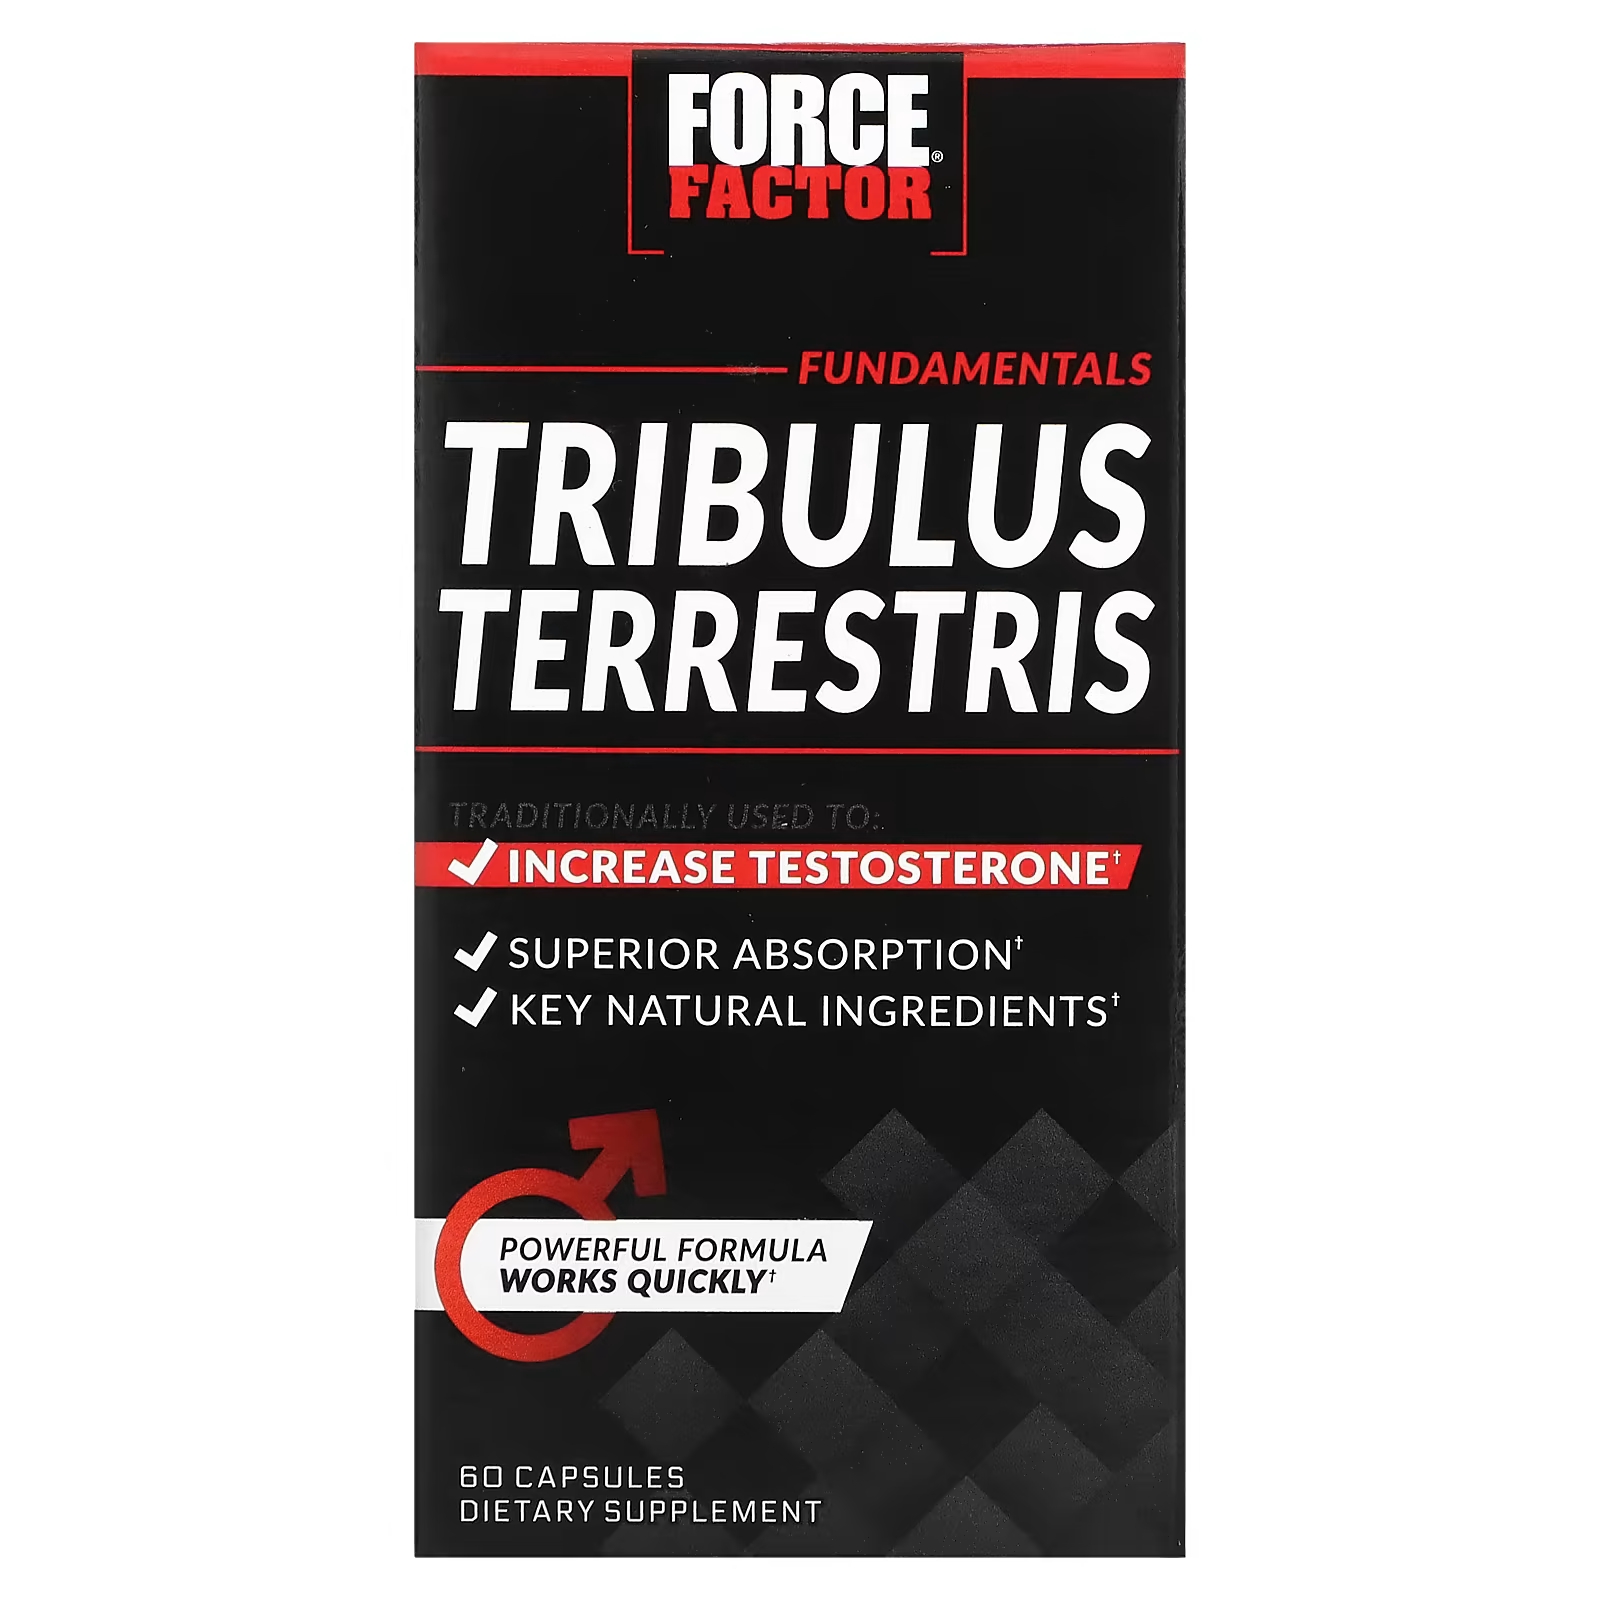 Force Factor Force Factor Tribulus Terrestris Бустер тестостерона, 60 капсул force factor force factor tribulus terrestris бустер тестостерона 60 капсул